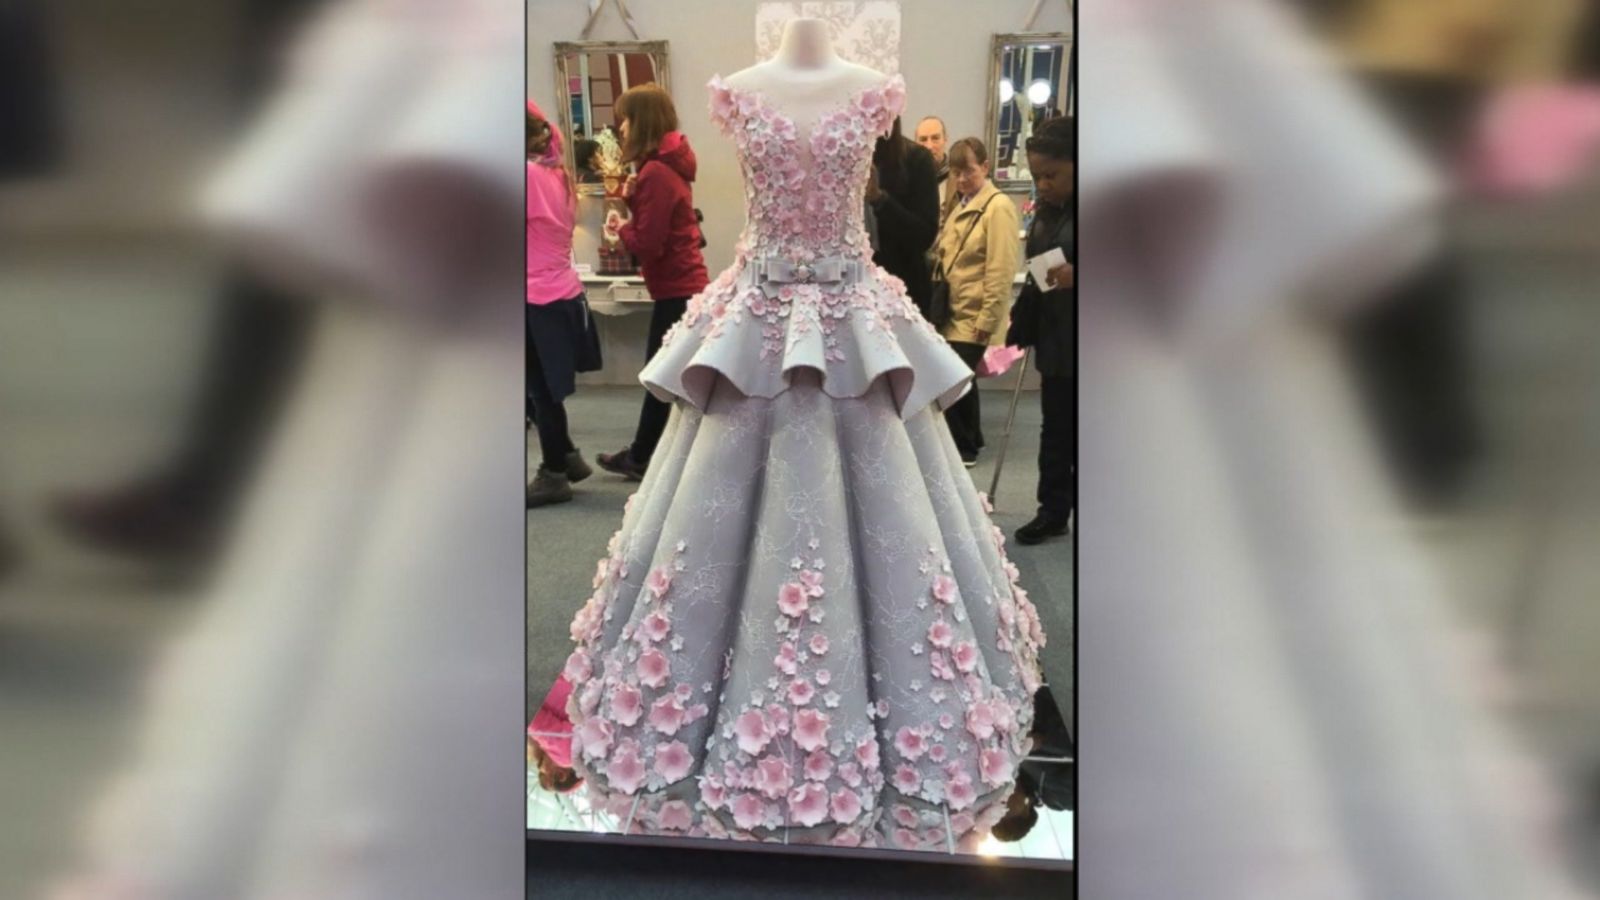 Life size wedding dress cake wows at cake show